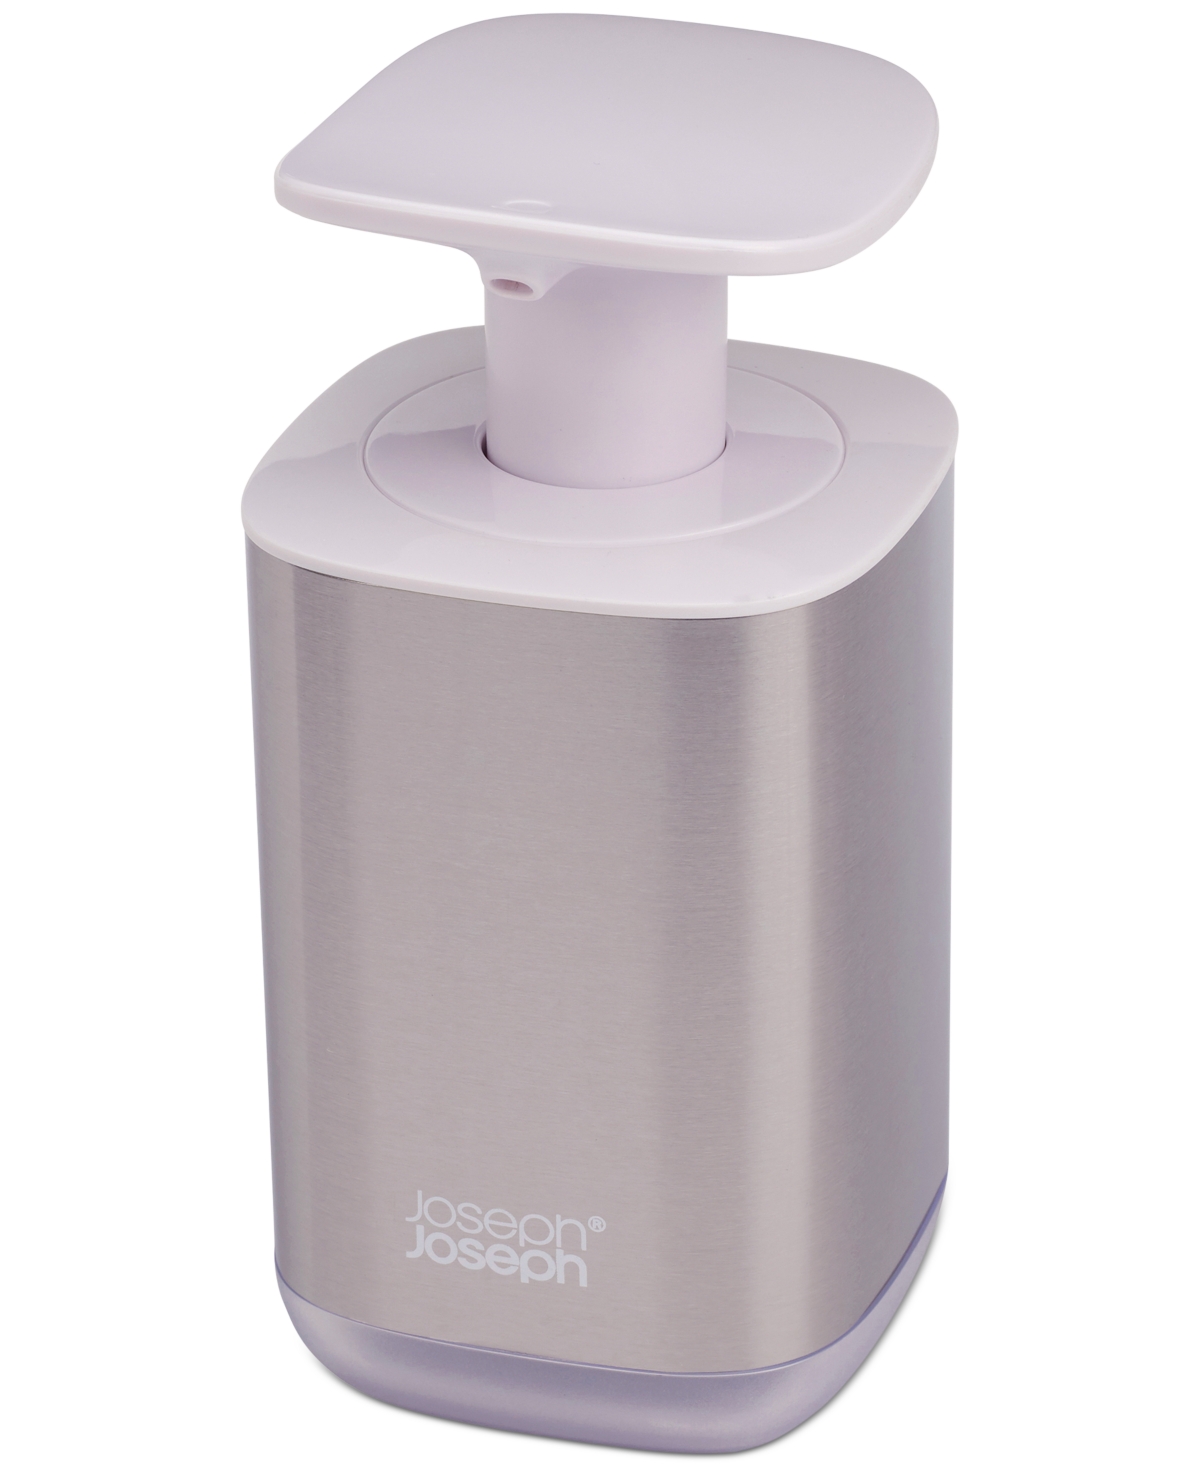 Presto Hygienic Steel Soap Dispenser - White